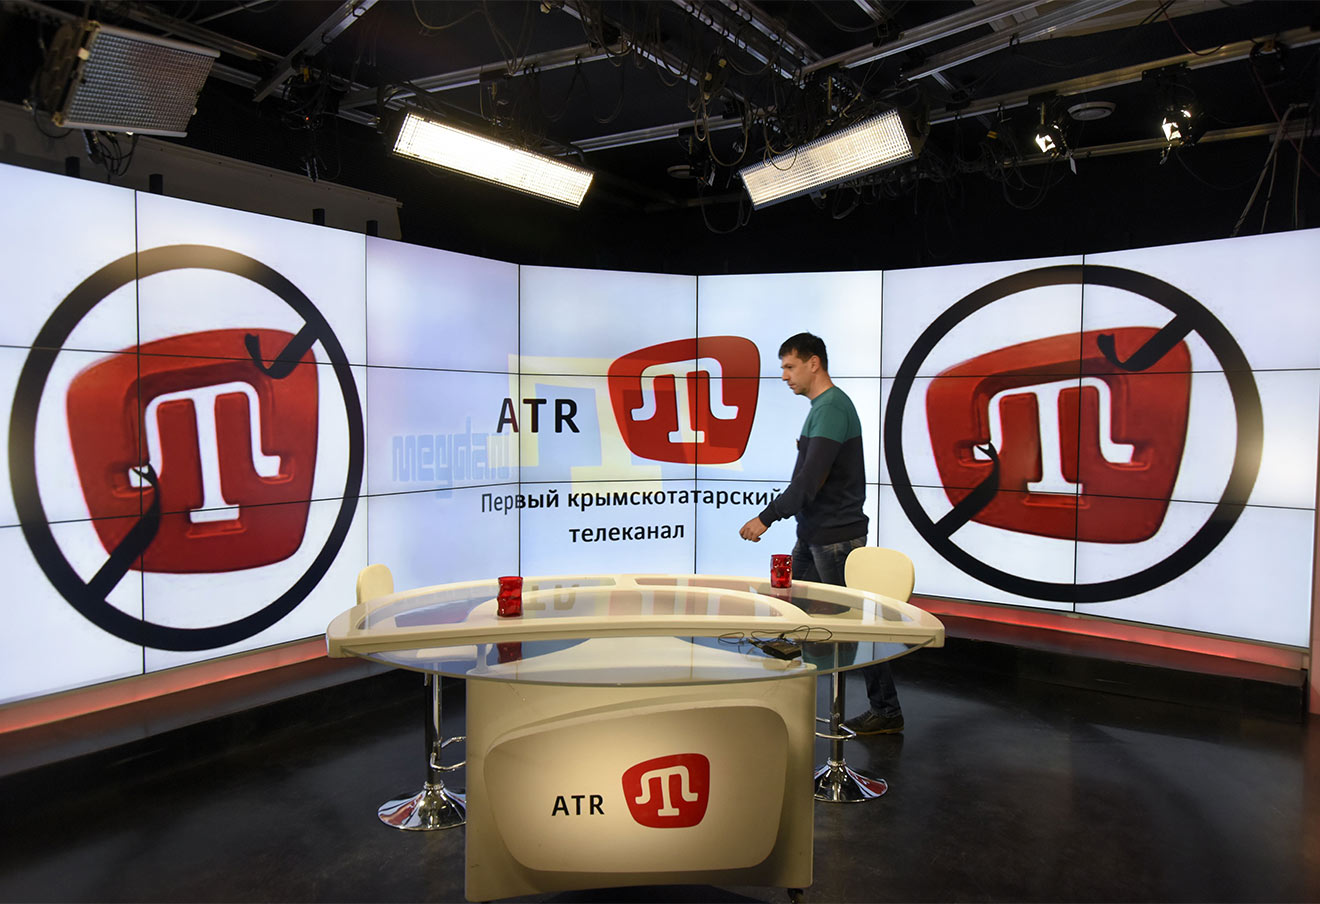 Минфин выделит 35 млн грн крымскотатарскому телеканалу АТР